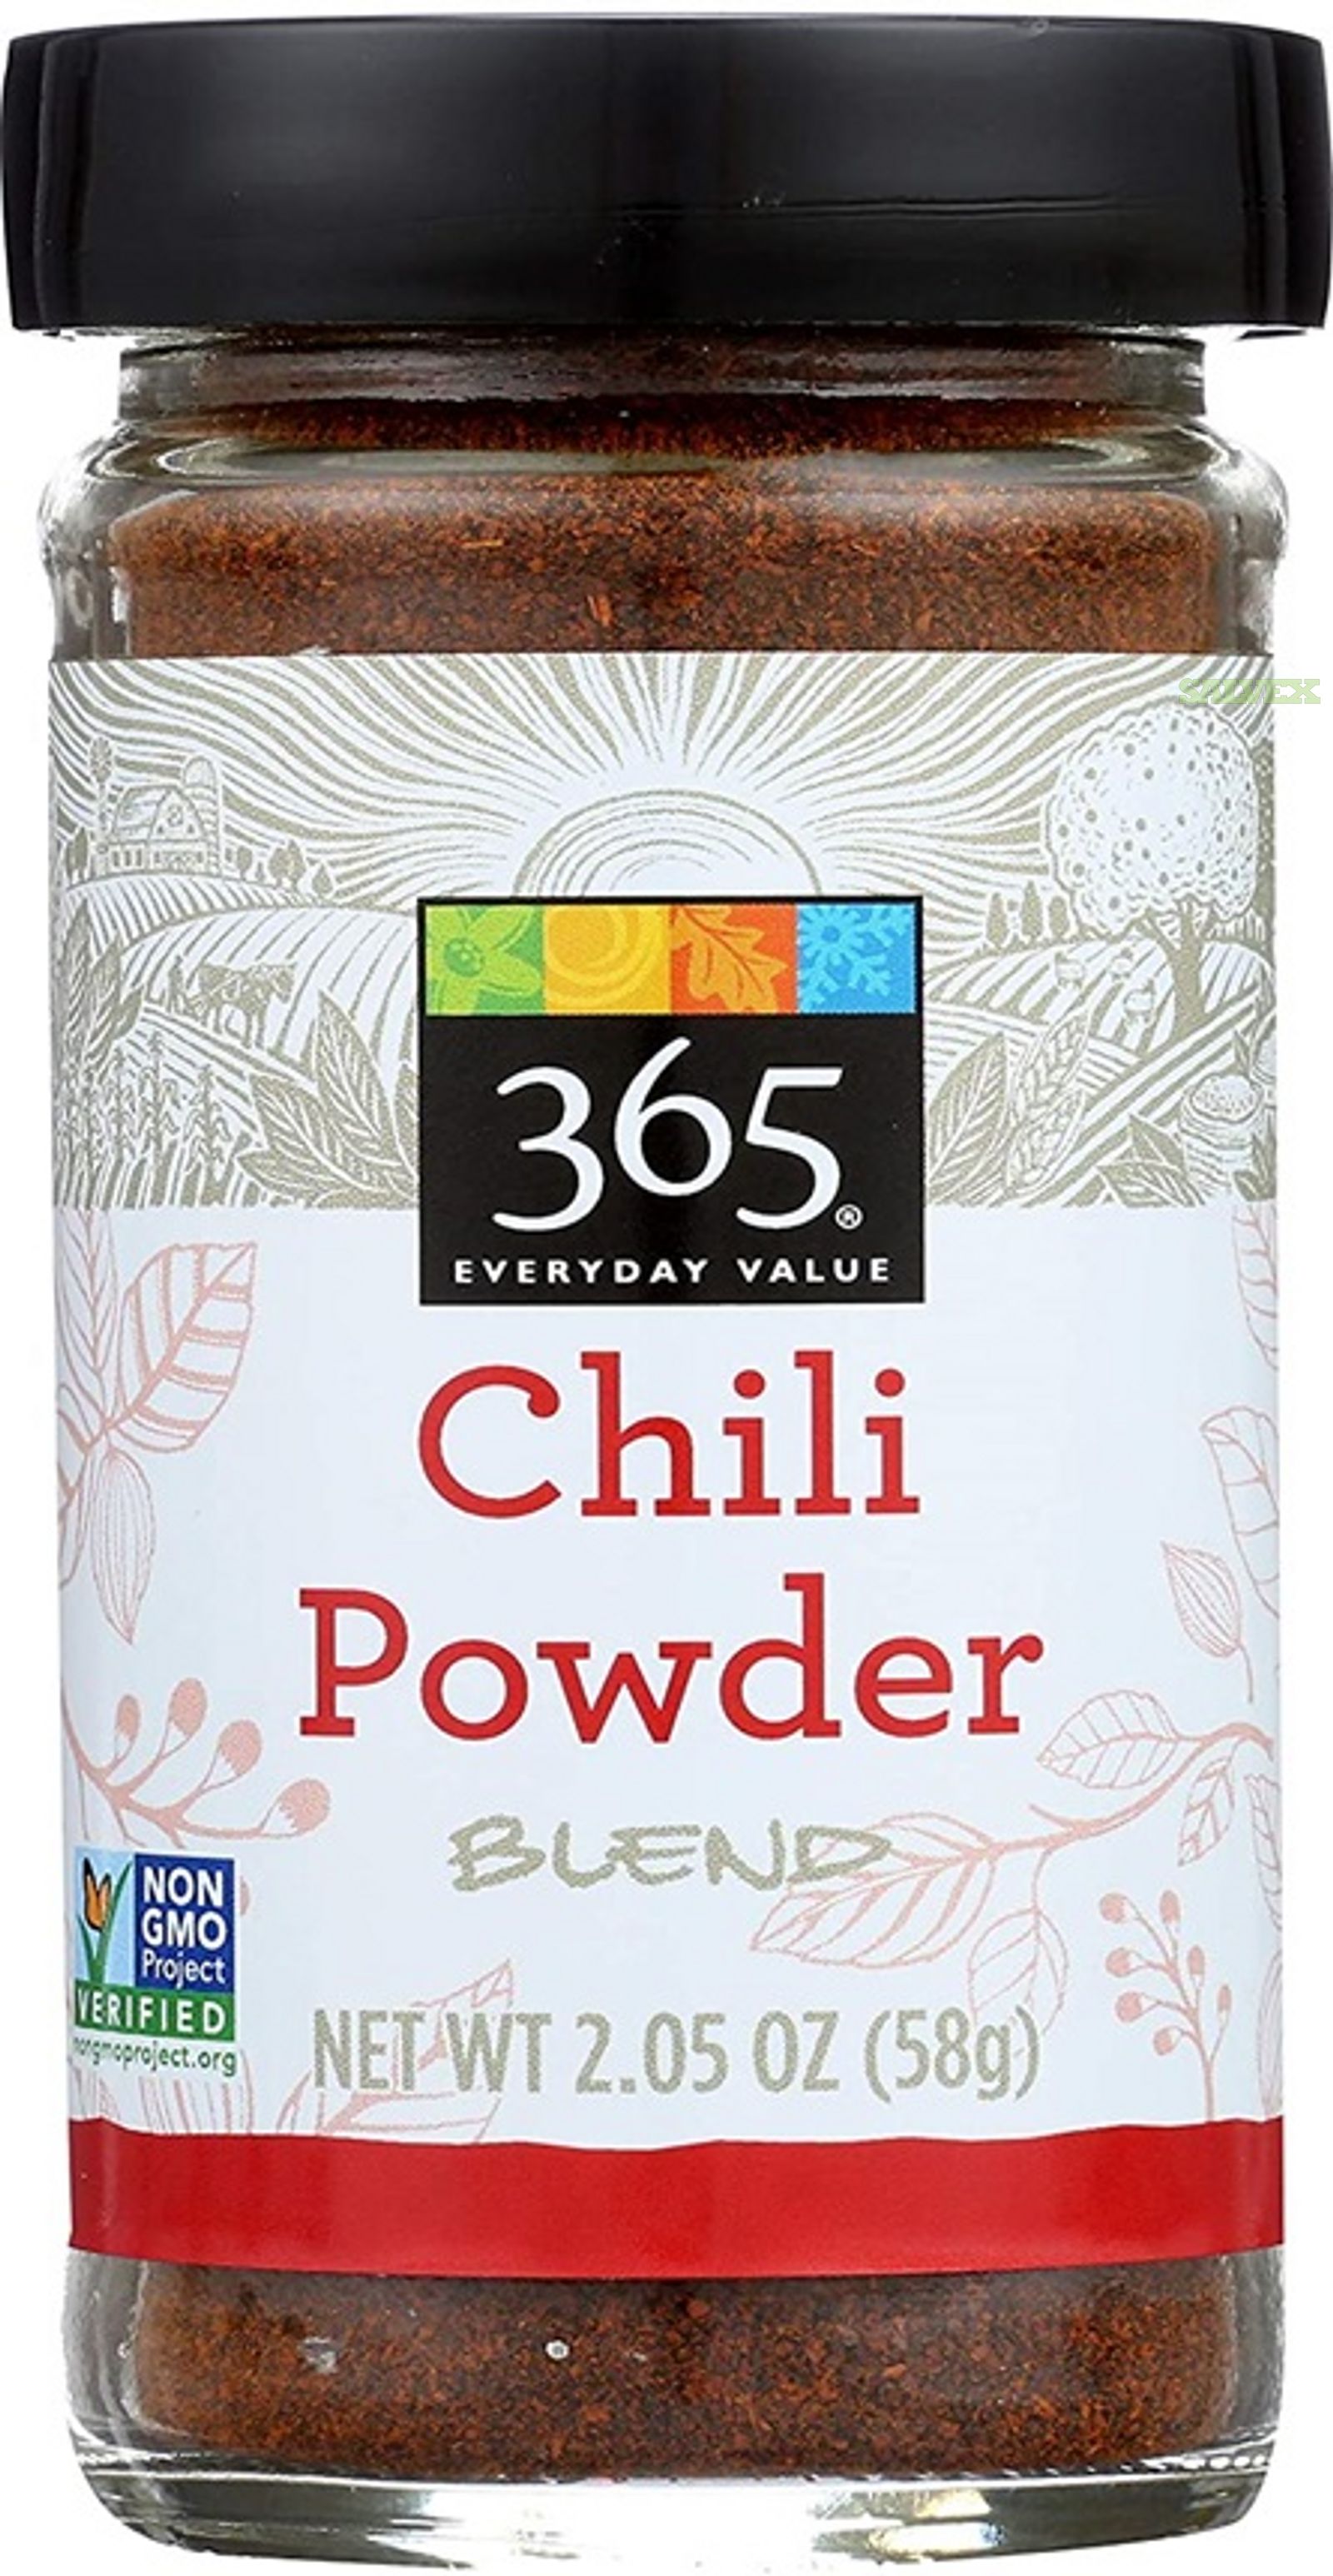 365 Whole Food Chili Powder Blend 2.05-oz - 11,484 Jars